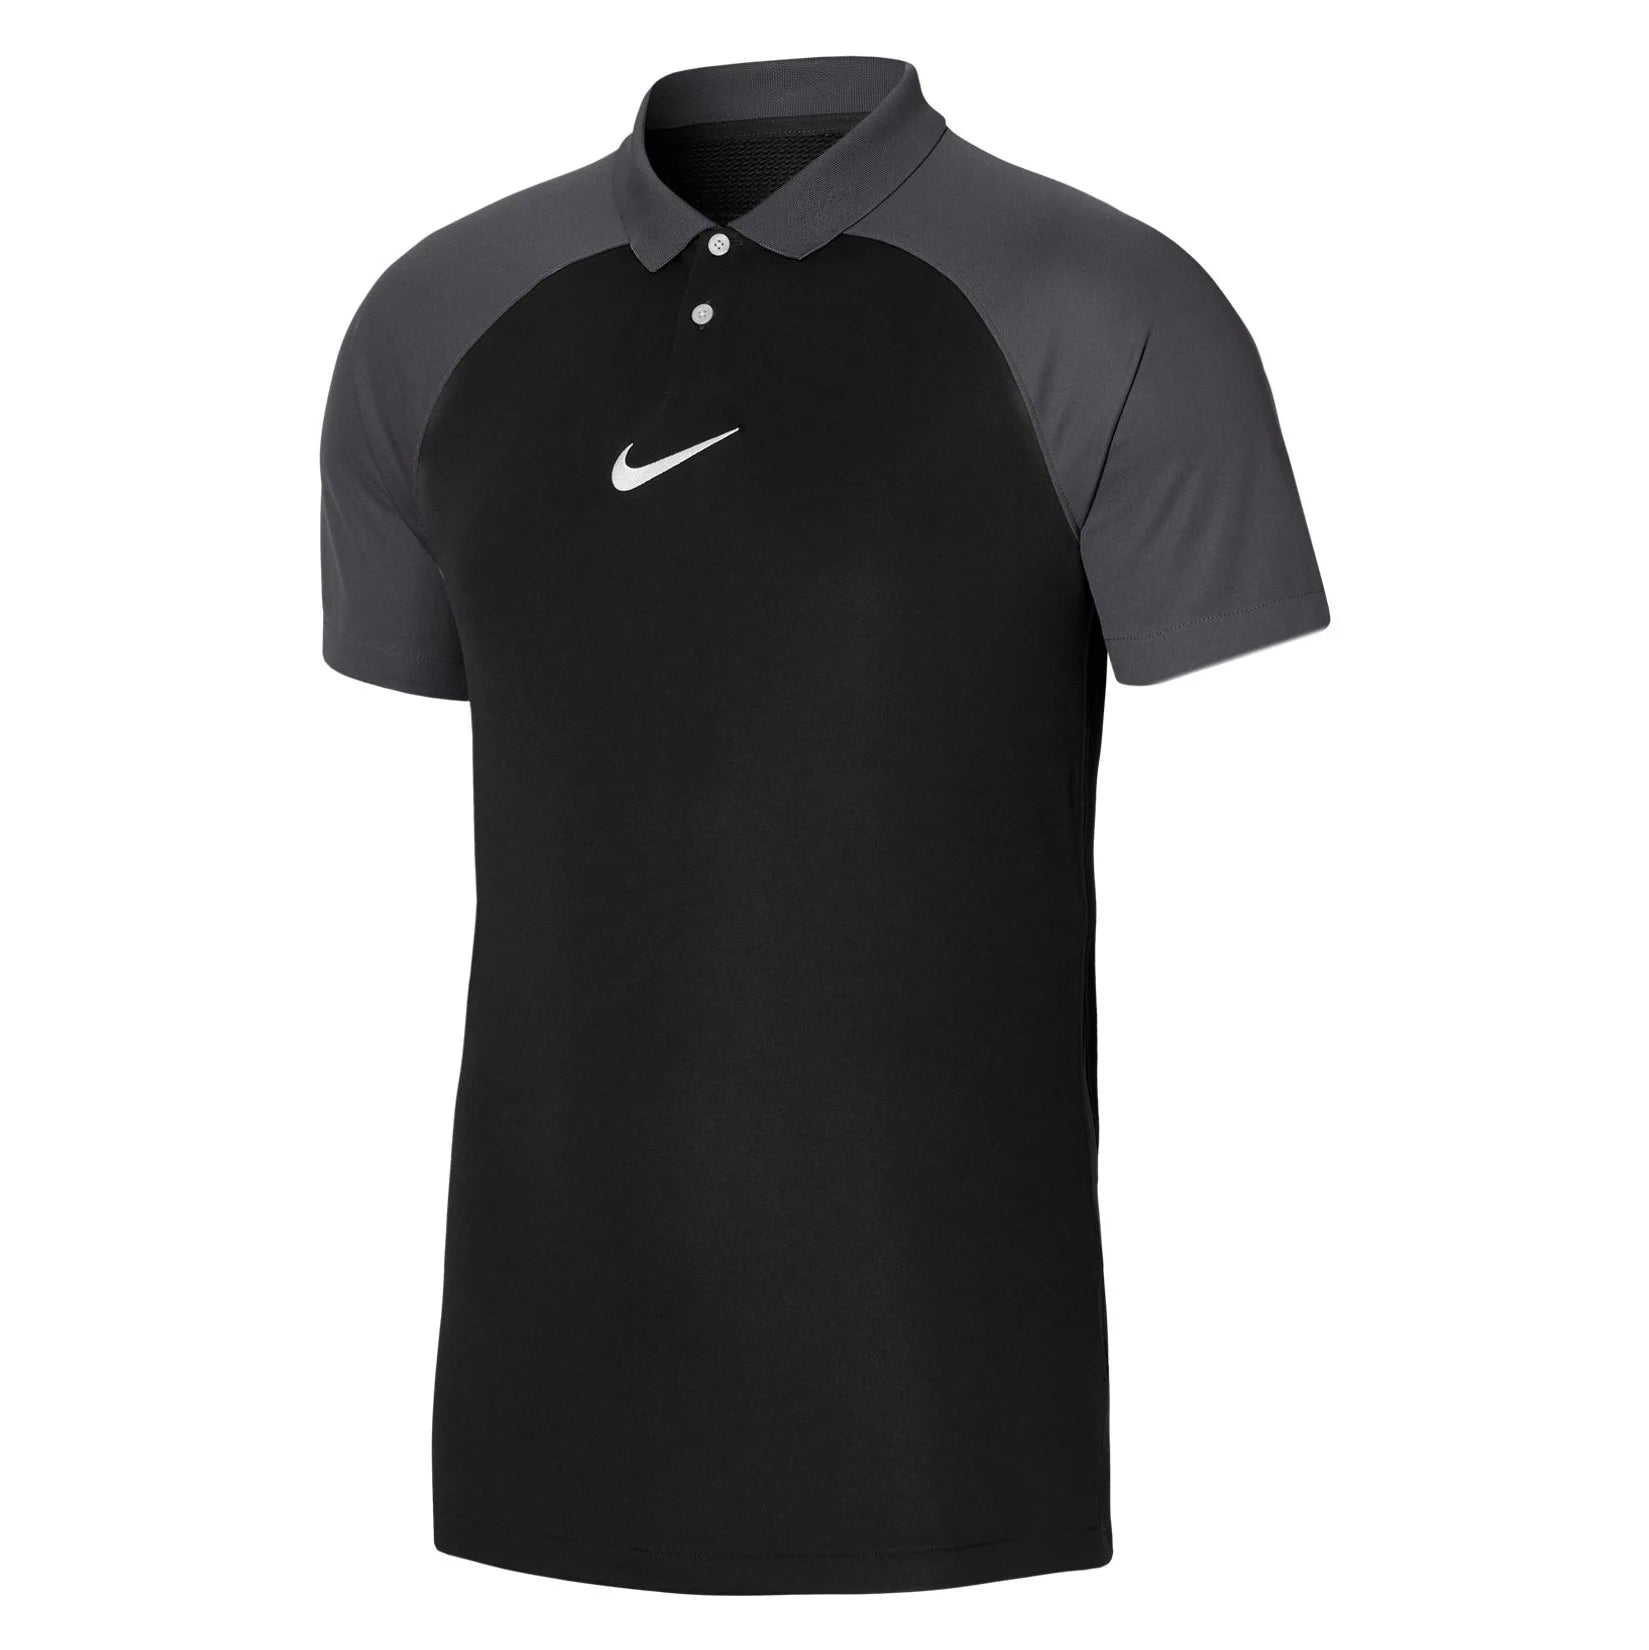 2023/24 Nike Referee Polo - A&H International